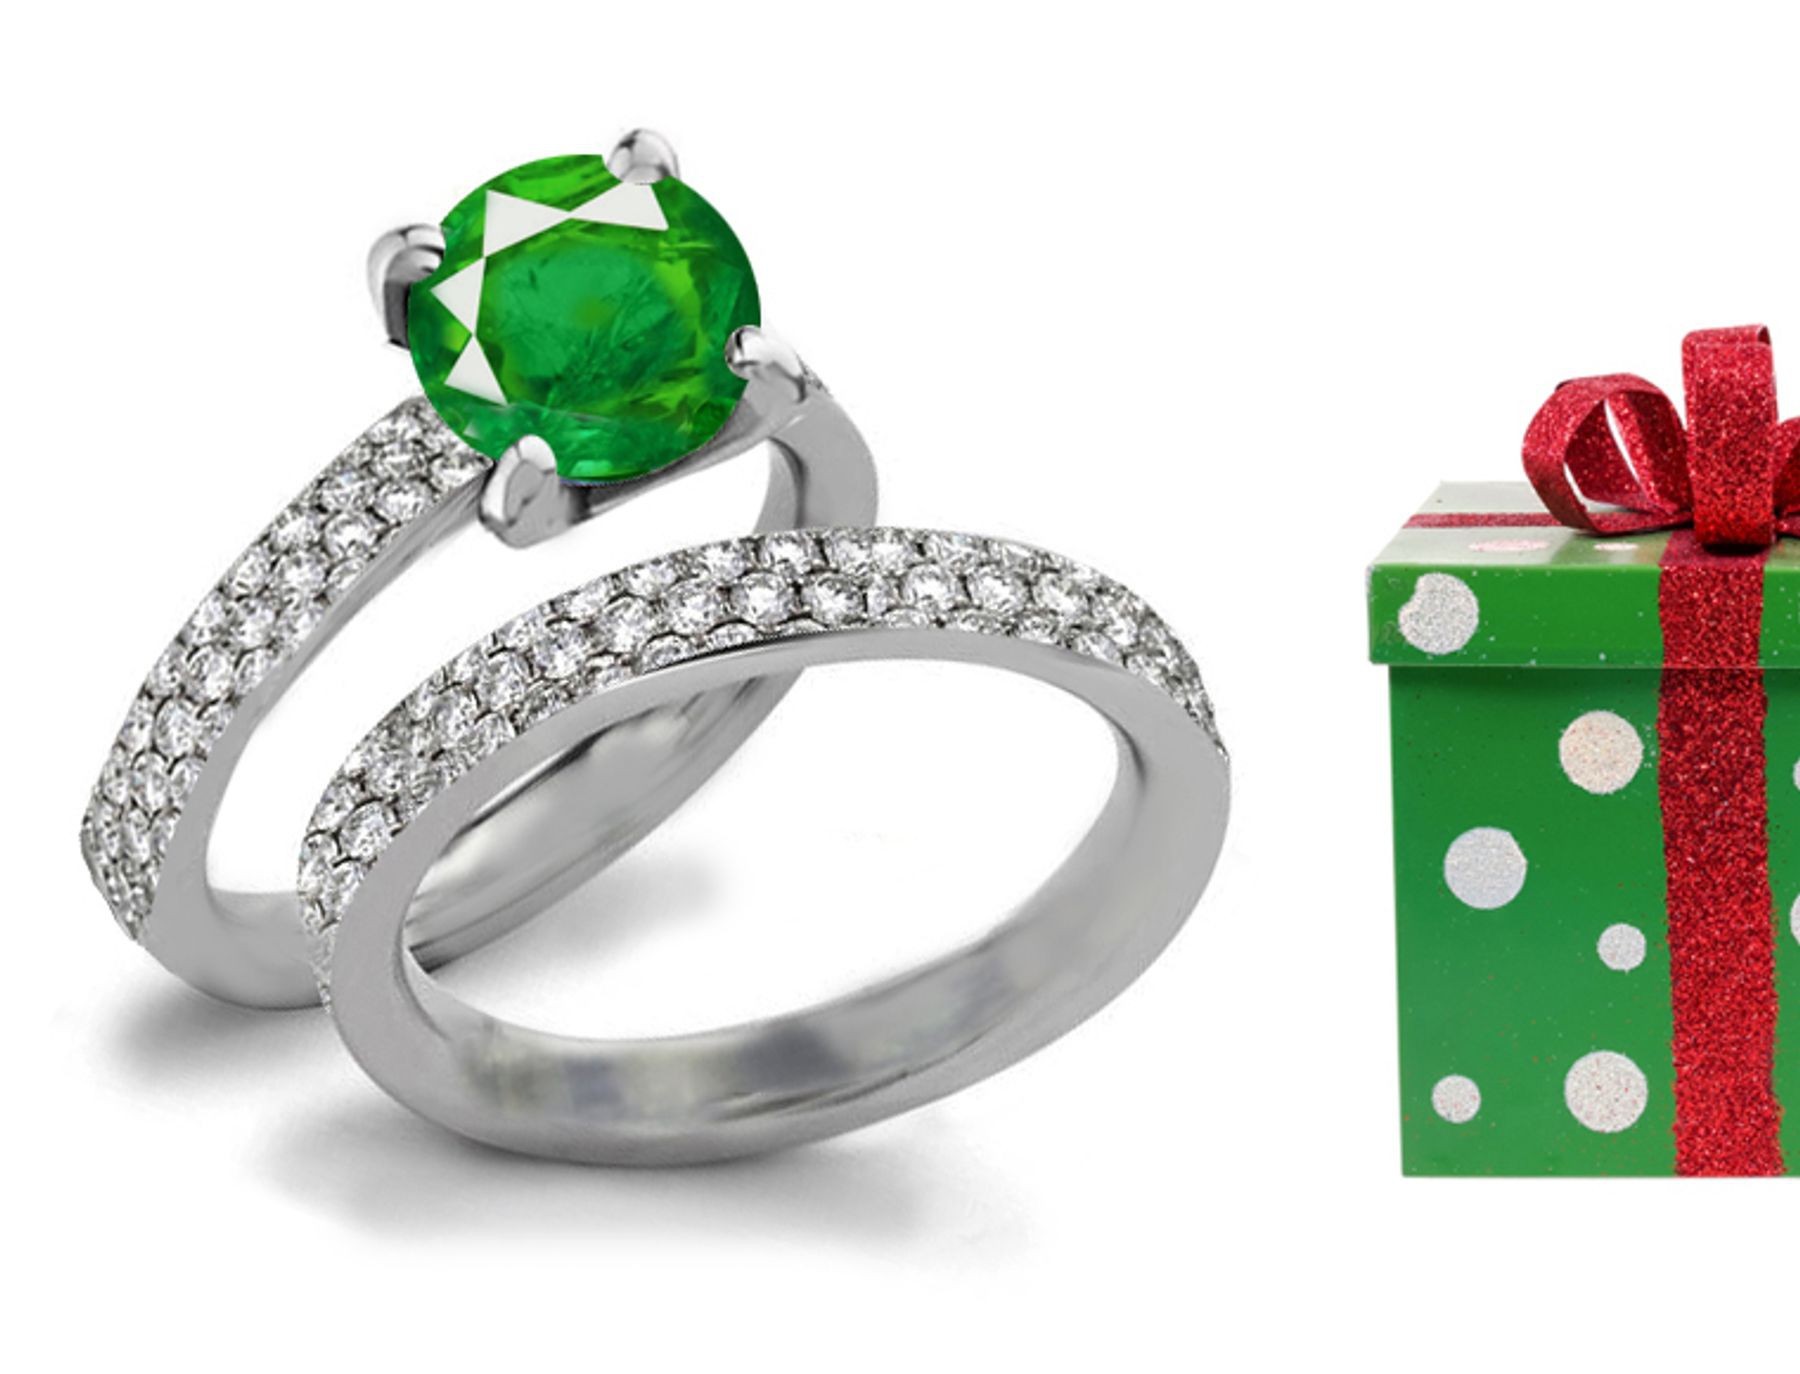 Specially Prepared Classic & Elegant Design French Pave' Green Emerald & Diamond Ring in 14k White Gold Platinum